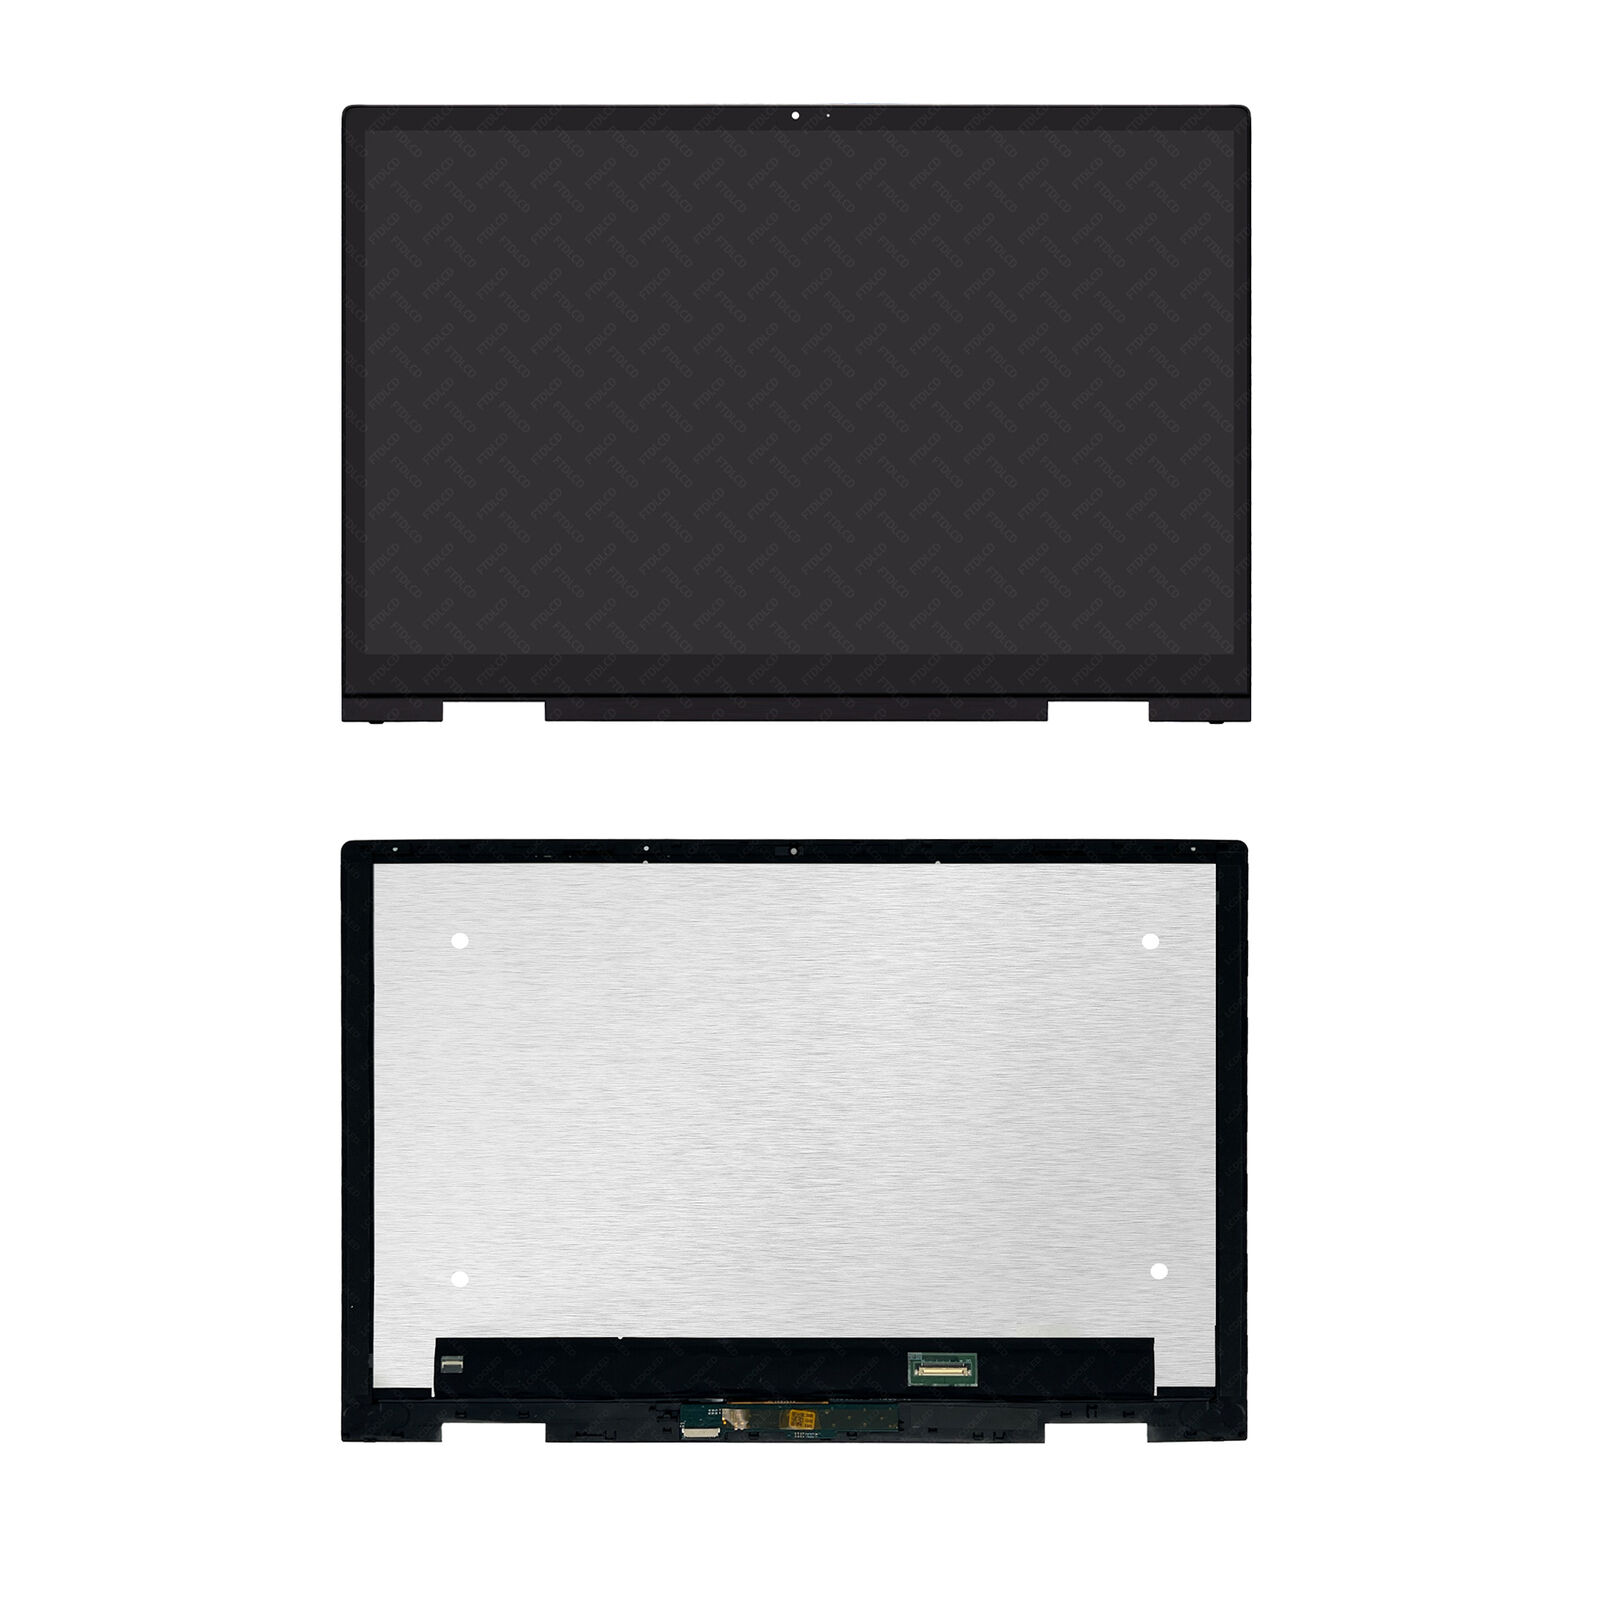 L93182-001 LCD TouchScreen Assembly W/Bezel for HP Envy x360 15t-ed100 15t-ed000